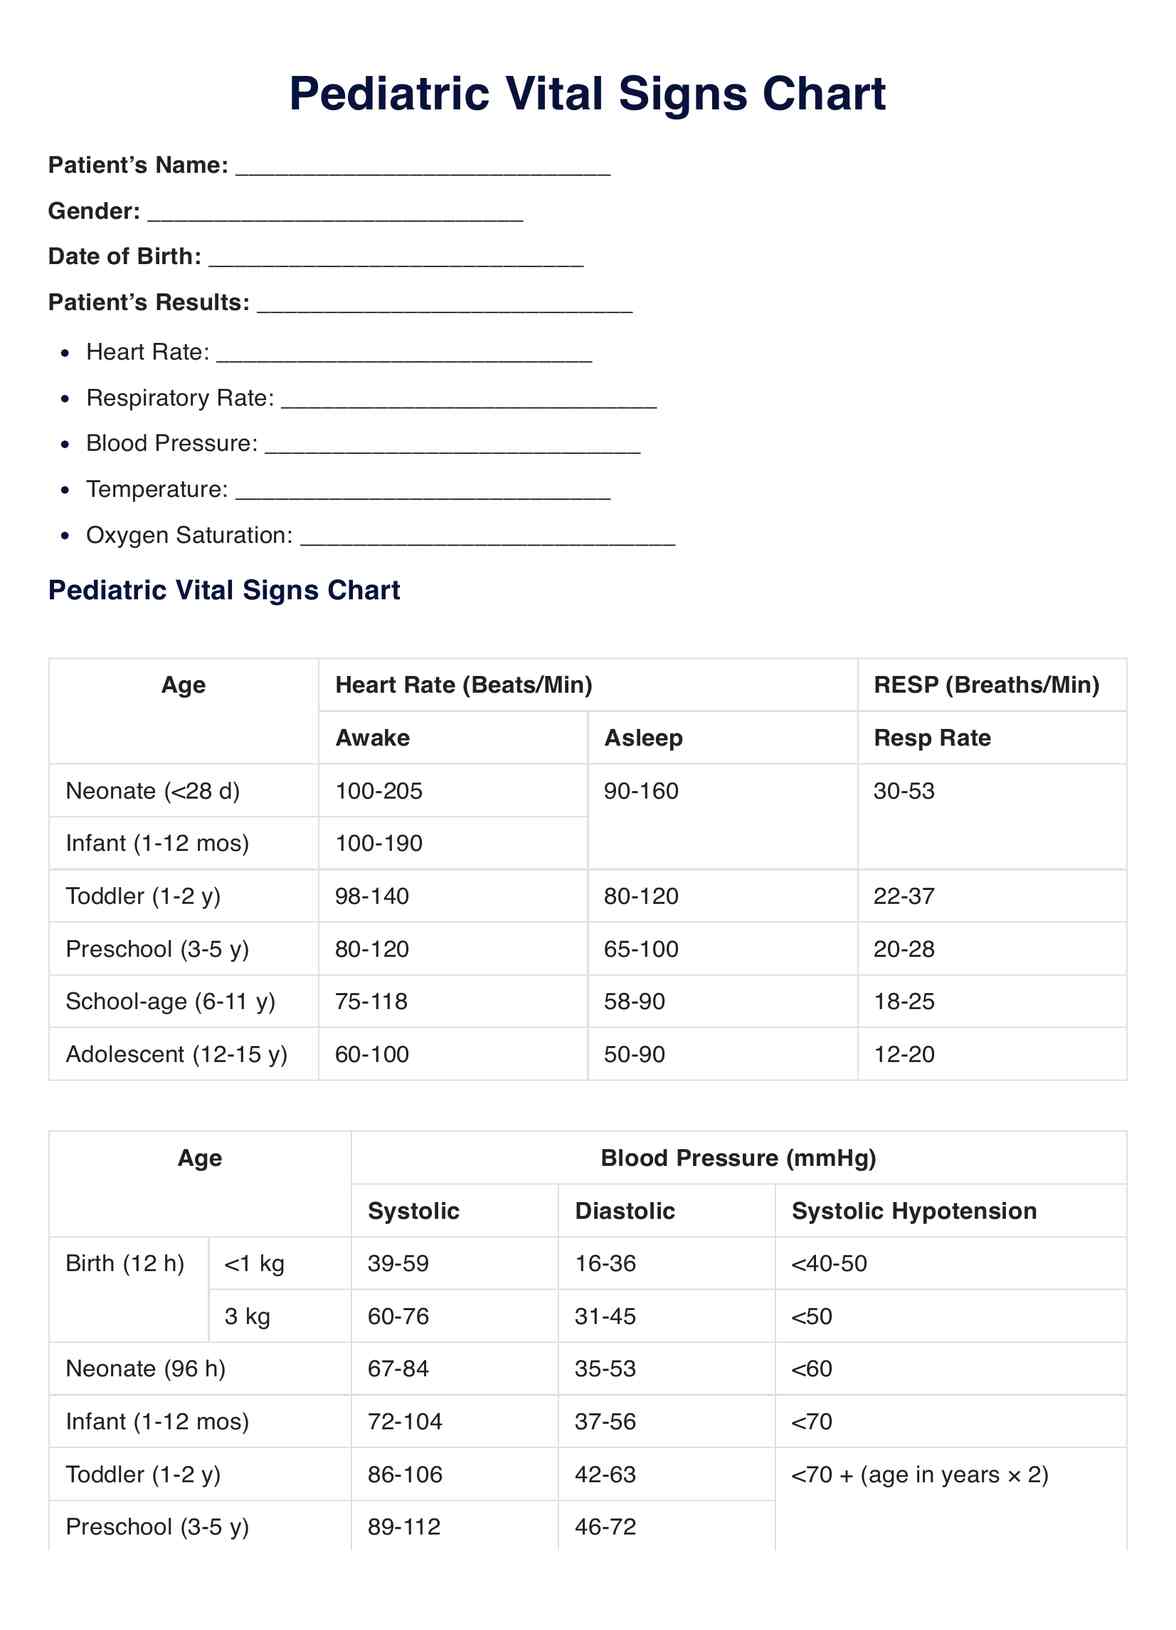 Pediatric Vital Signs PDF Example